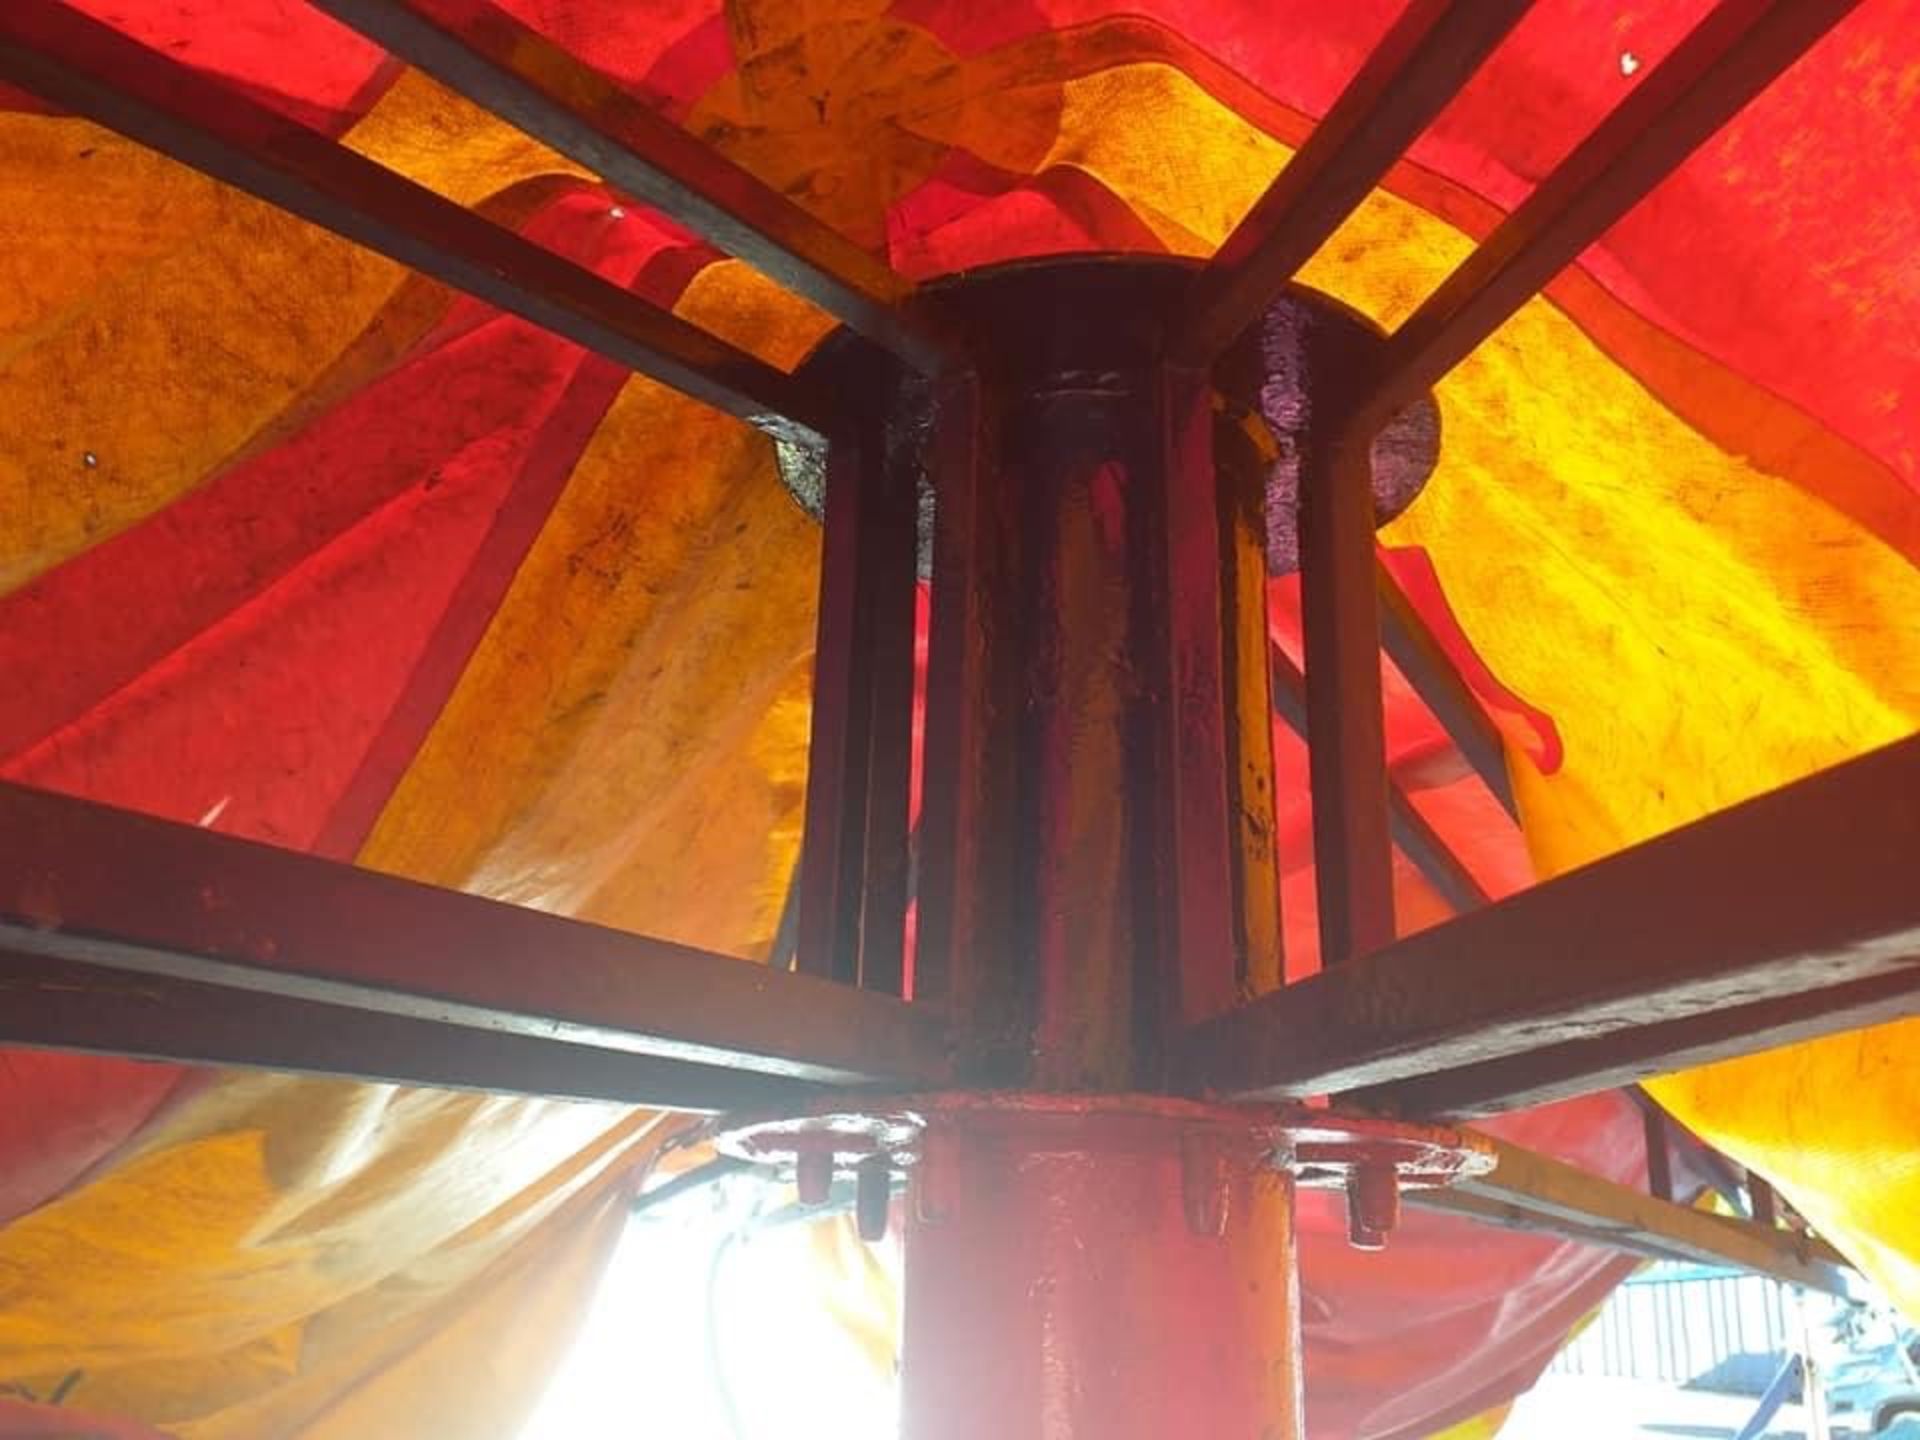 Fairground Top Canopy From Ride Steel Structure Beer Garden Pub Etc - Image 2 of 2